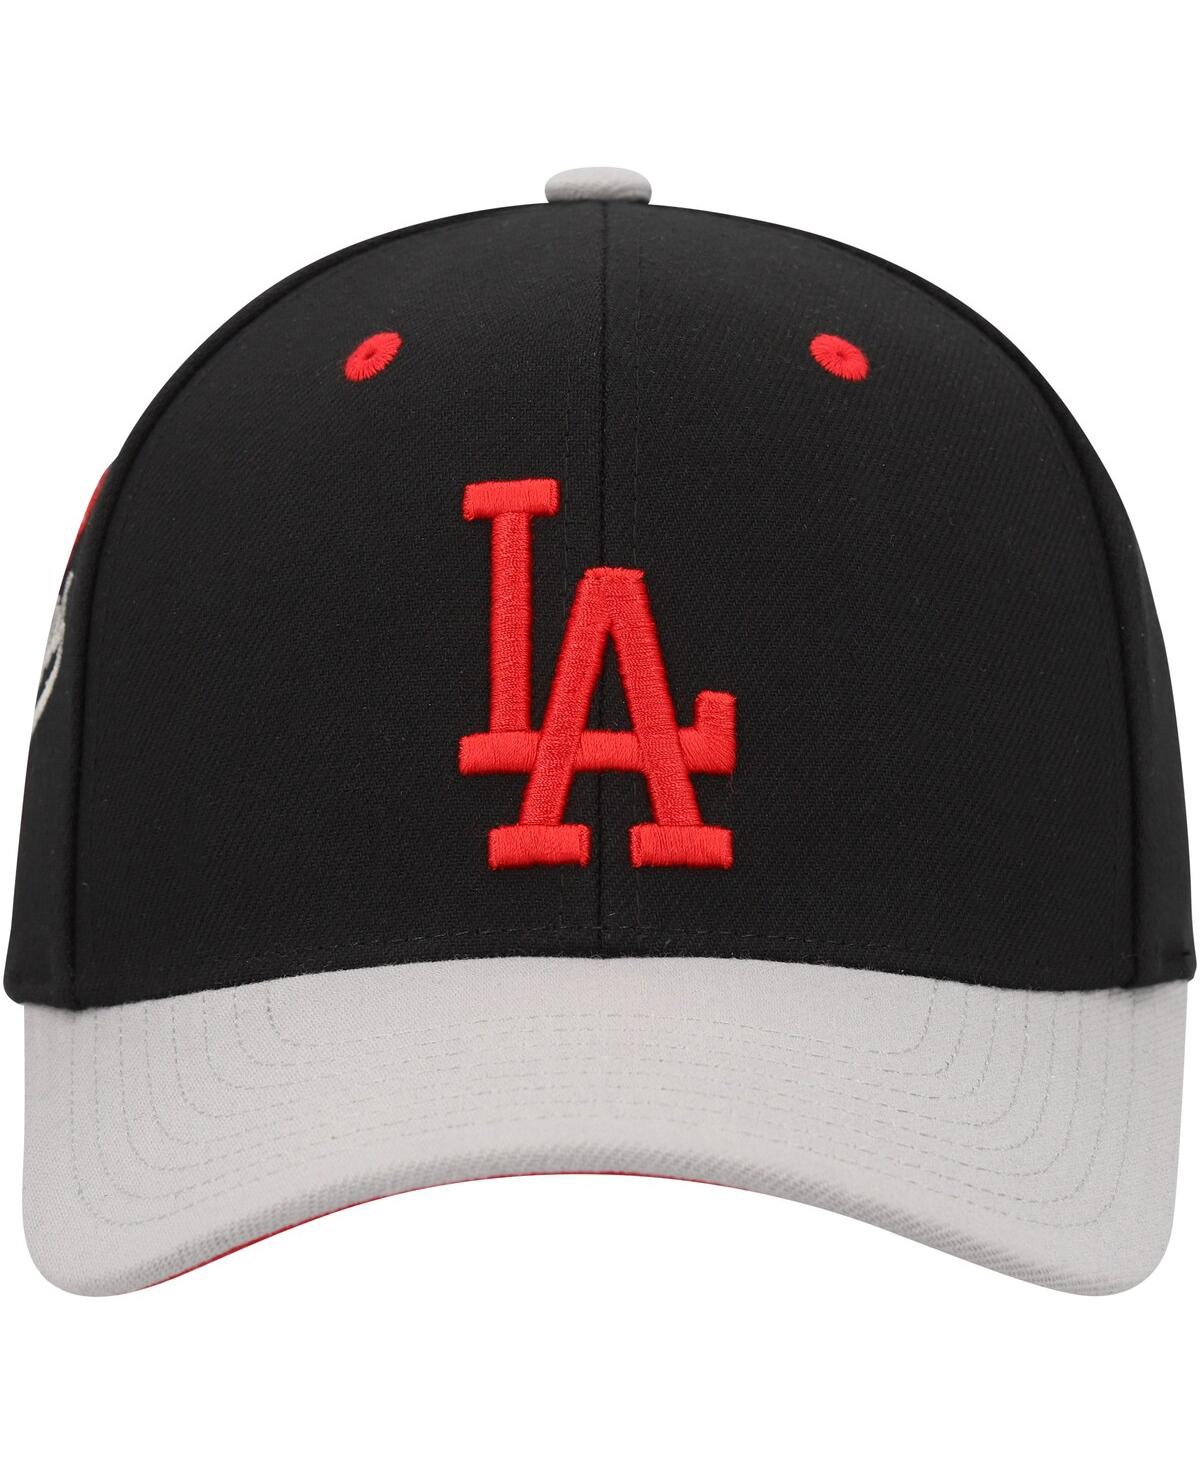 Shop Mitchell & Ness Men's  Black Los Angeles Dodgers Bred Pro Adjustable Hat